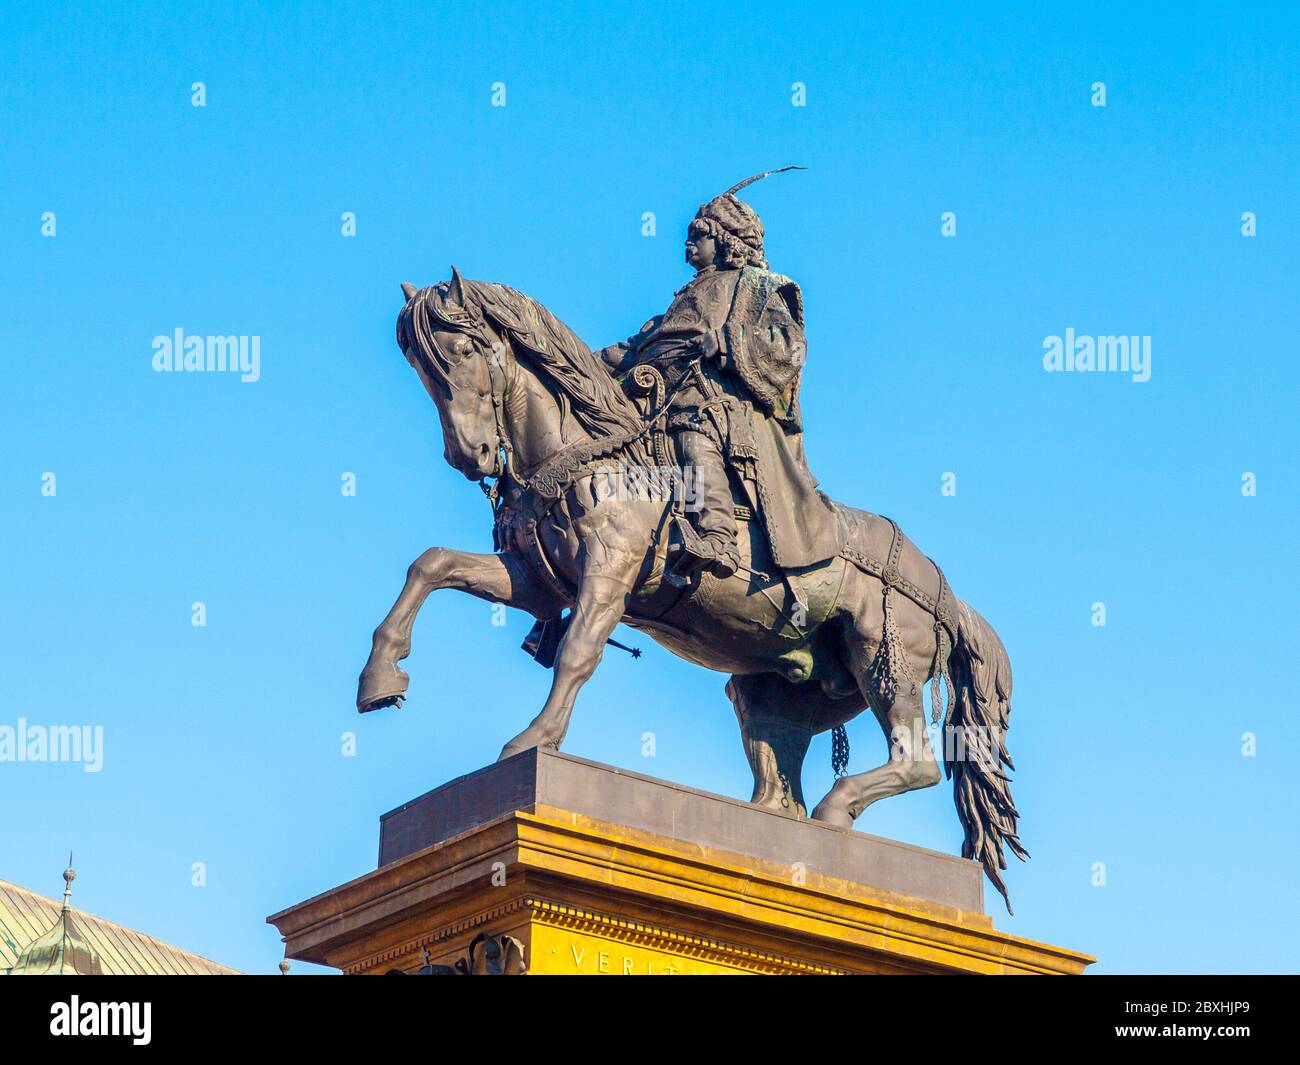 PODEBRADY, REPÚBLICA CHECA - 26 DE FEBRERO de 2018: Estatua ecuestre de George de Podebrady, Jiri z Podebrad, en Podebrady, República Checa. Foto de stock